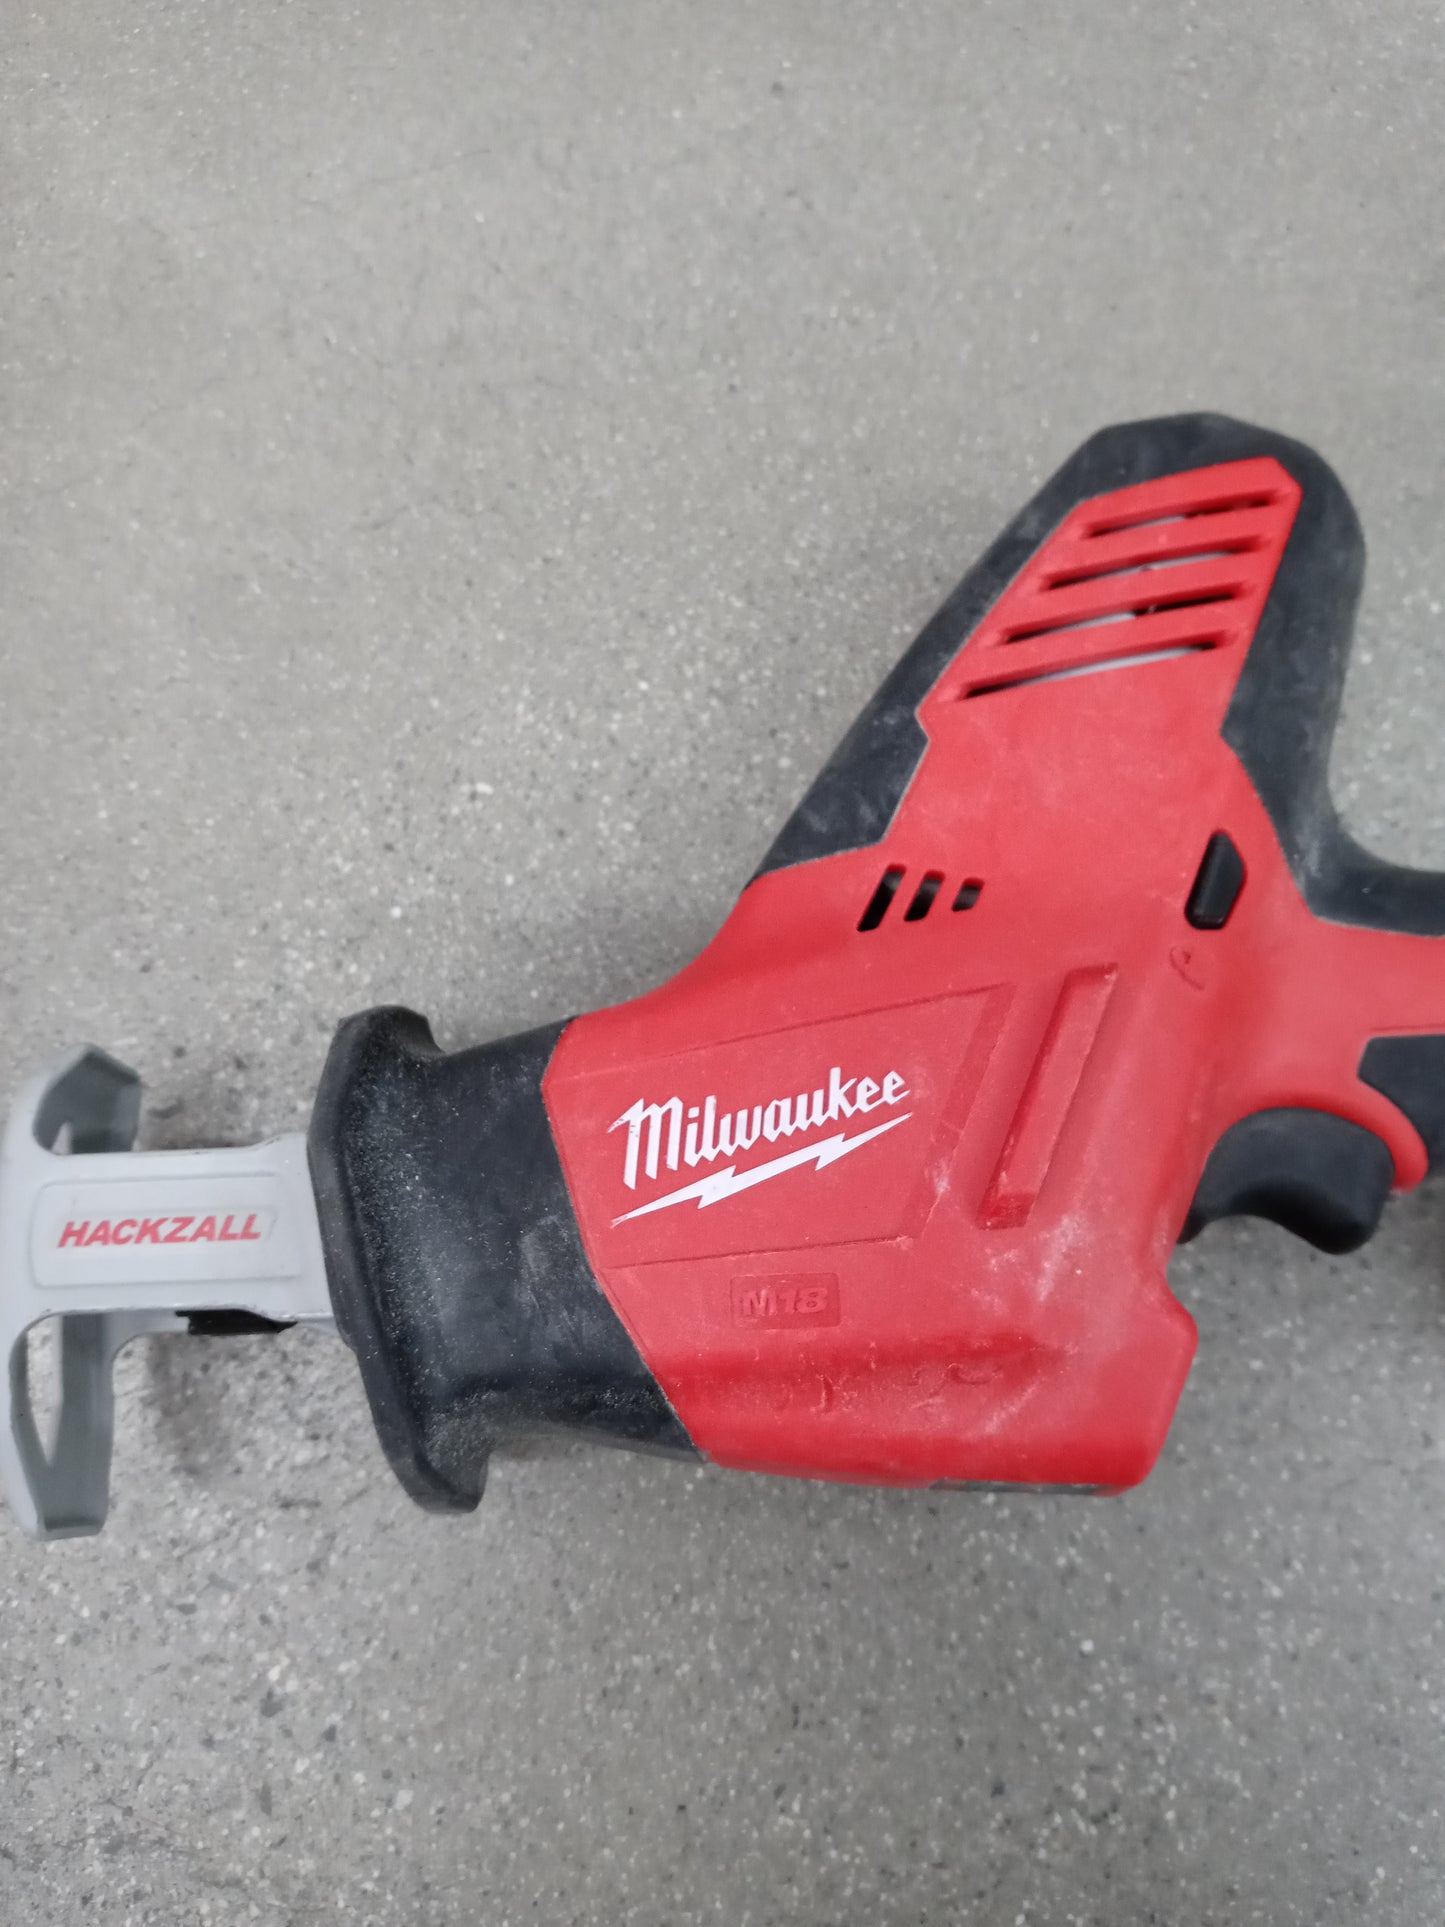 Milwaukee M18 Hackzall Reciprocating Saw -